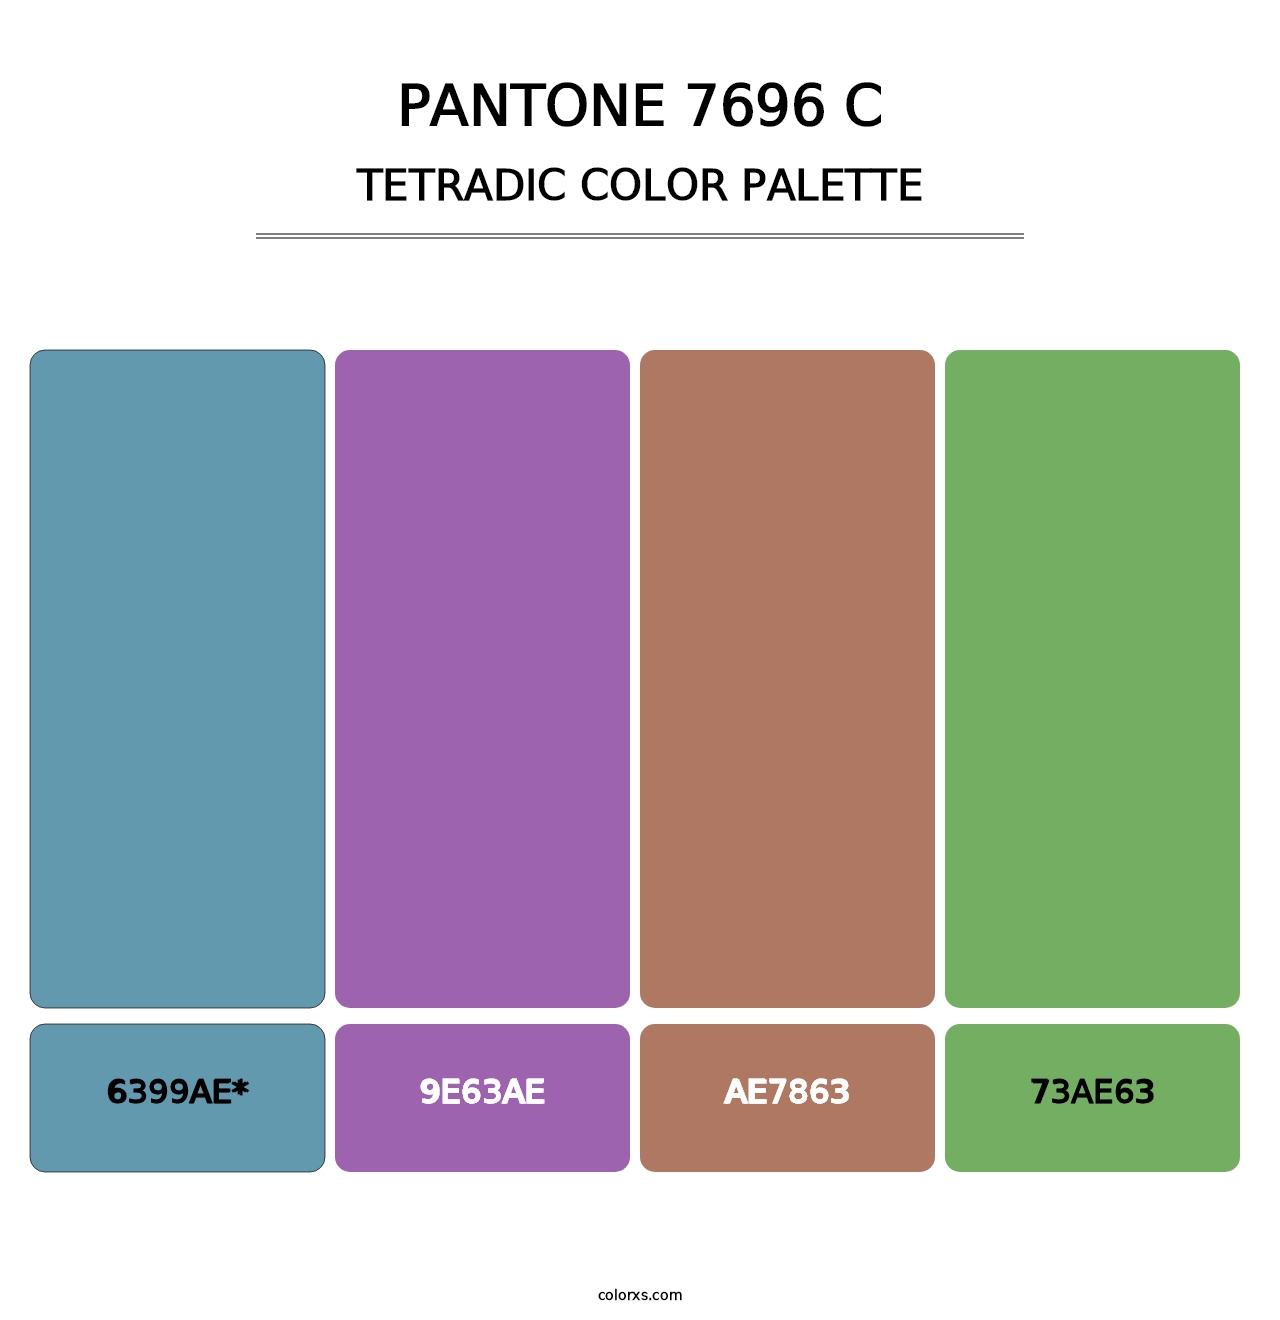 PANTONE 7696 C - Tetradic Color Palette